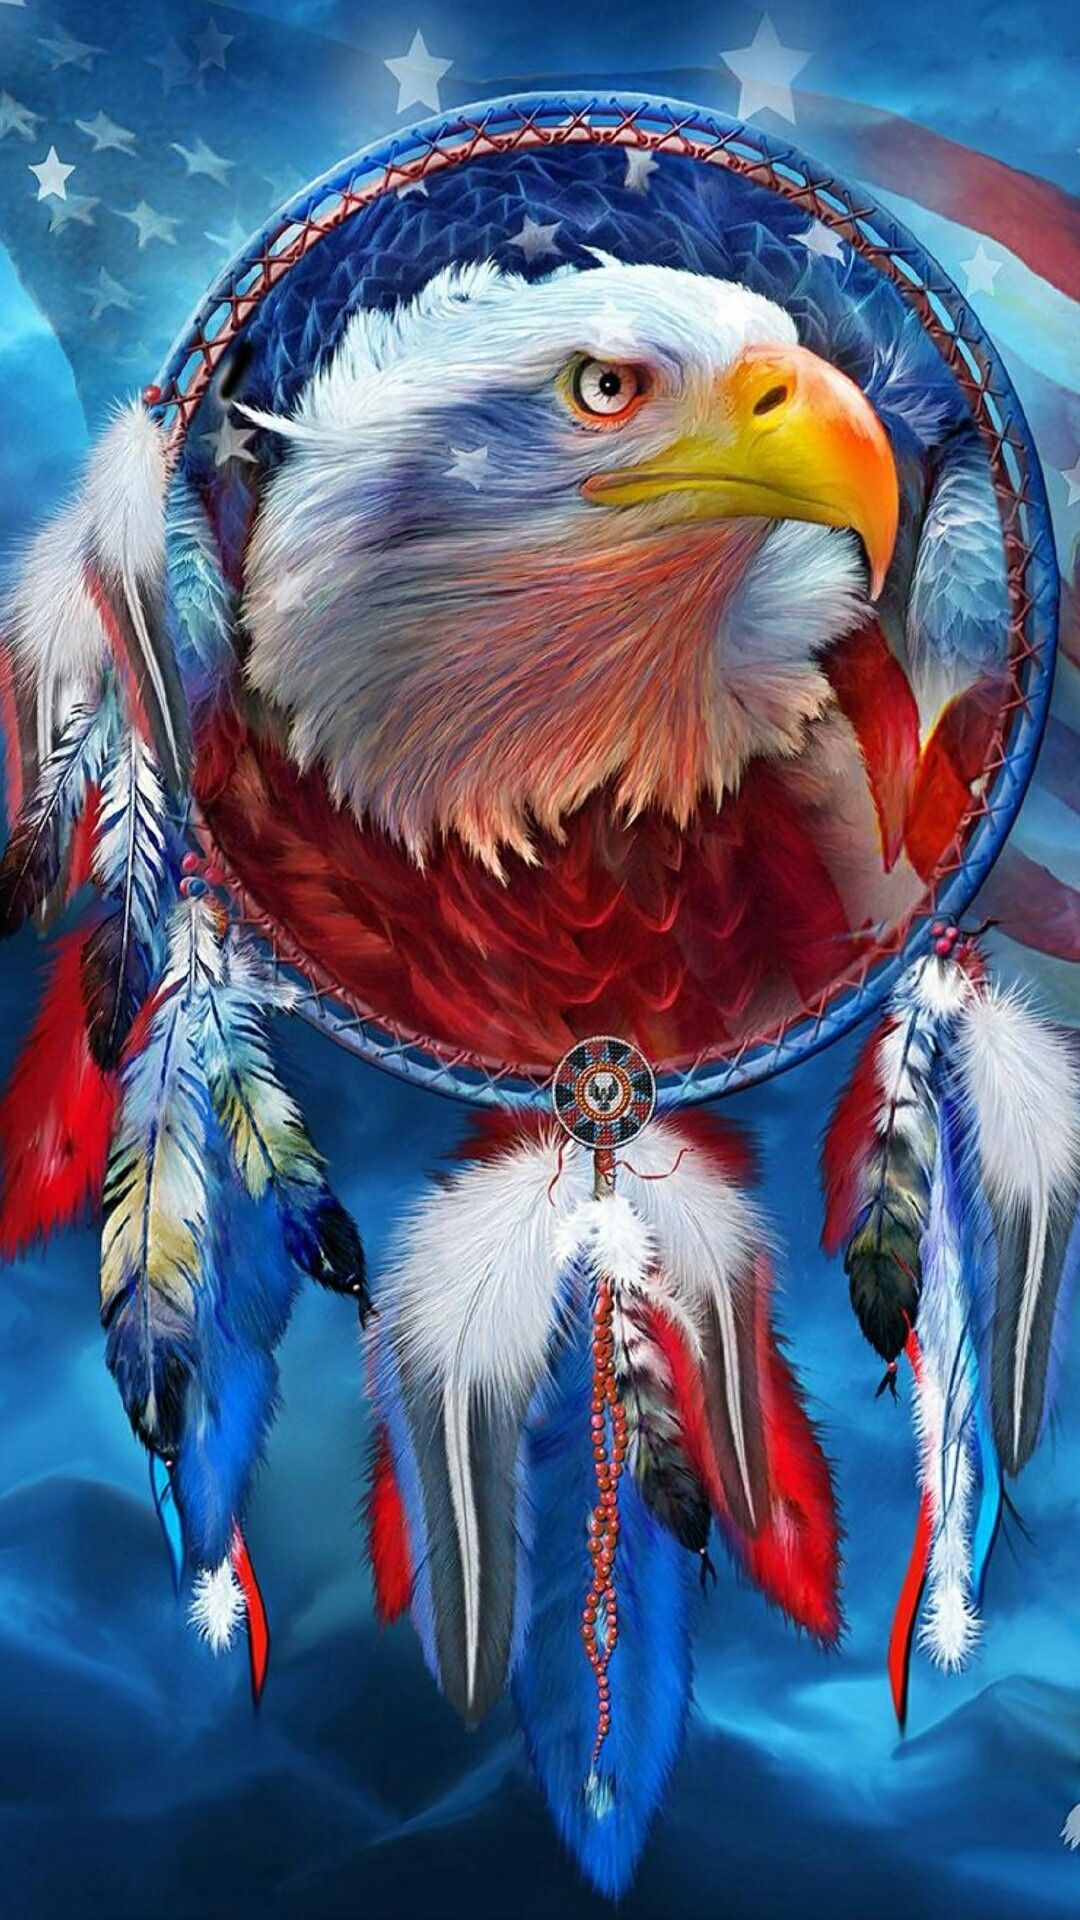 1080x1920 Pin by Tammy Marie on Dream Catchers | Eagle wallpaper, Dream catcher art, Native american artwork